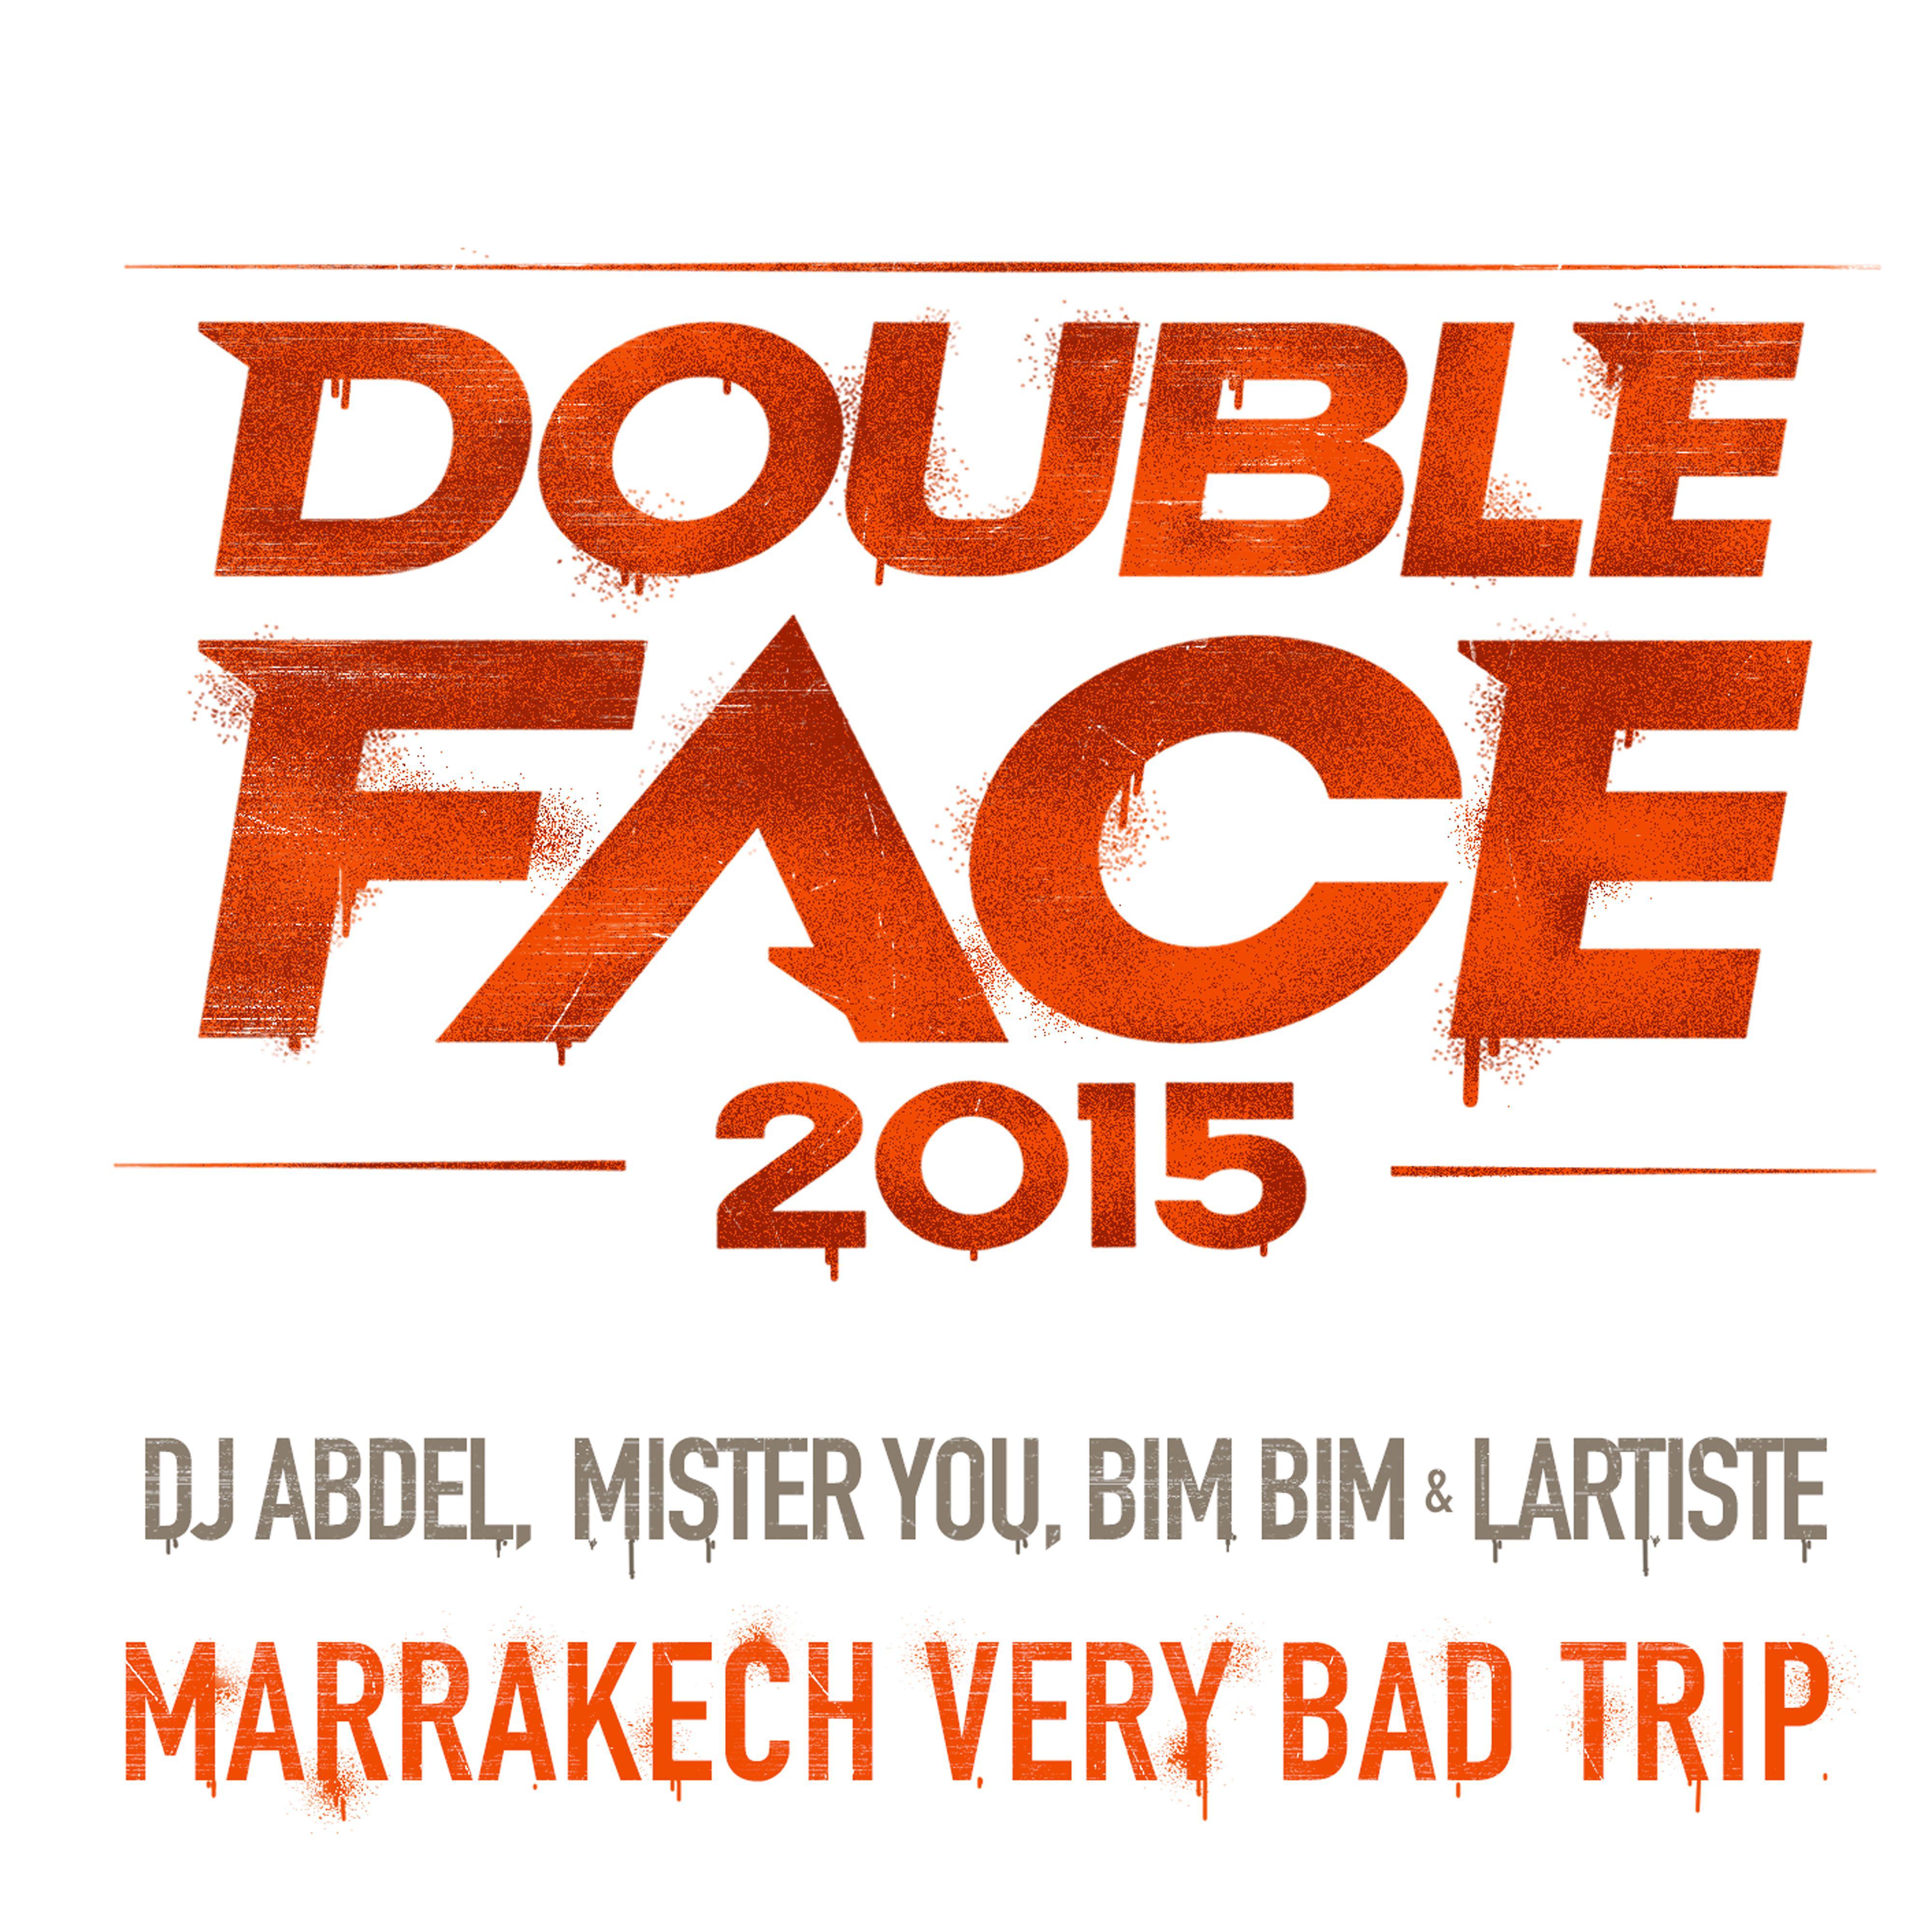 DJ Abdel - Marrakech Very Bad Trip (Double Face 2015) [Version courte]